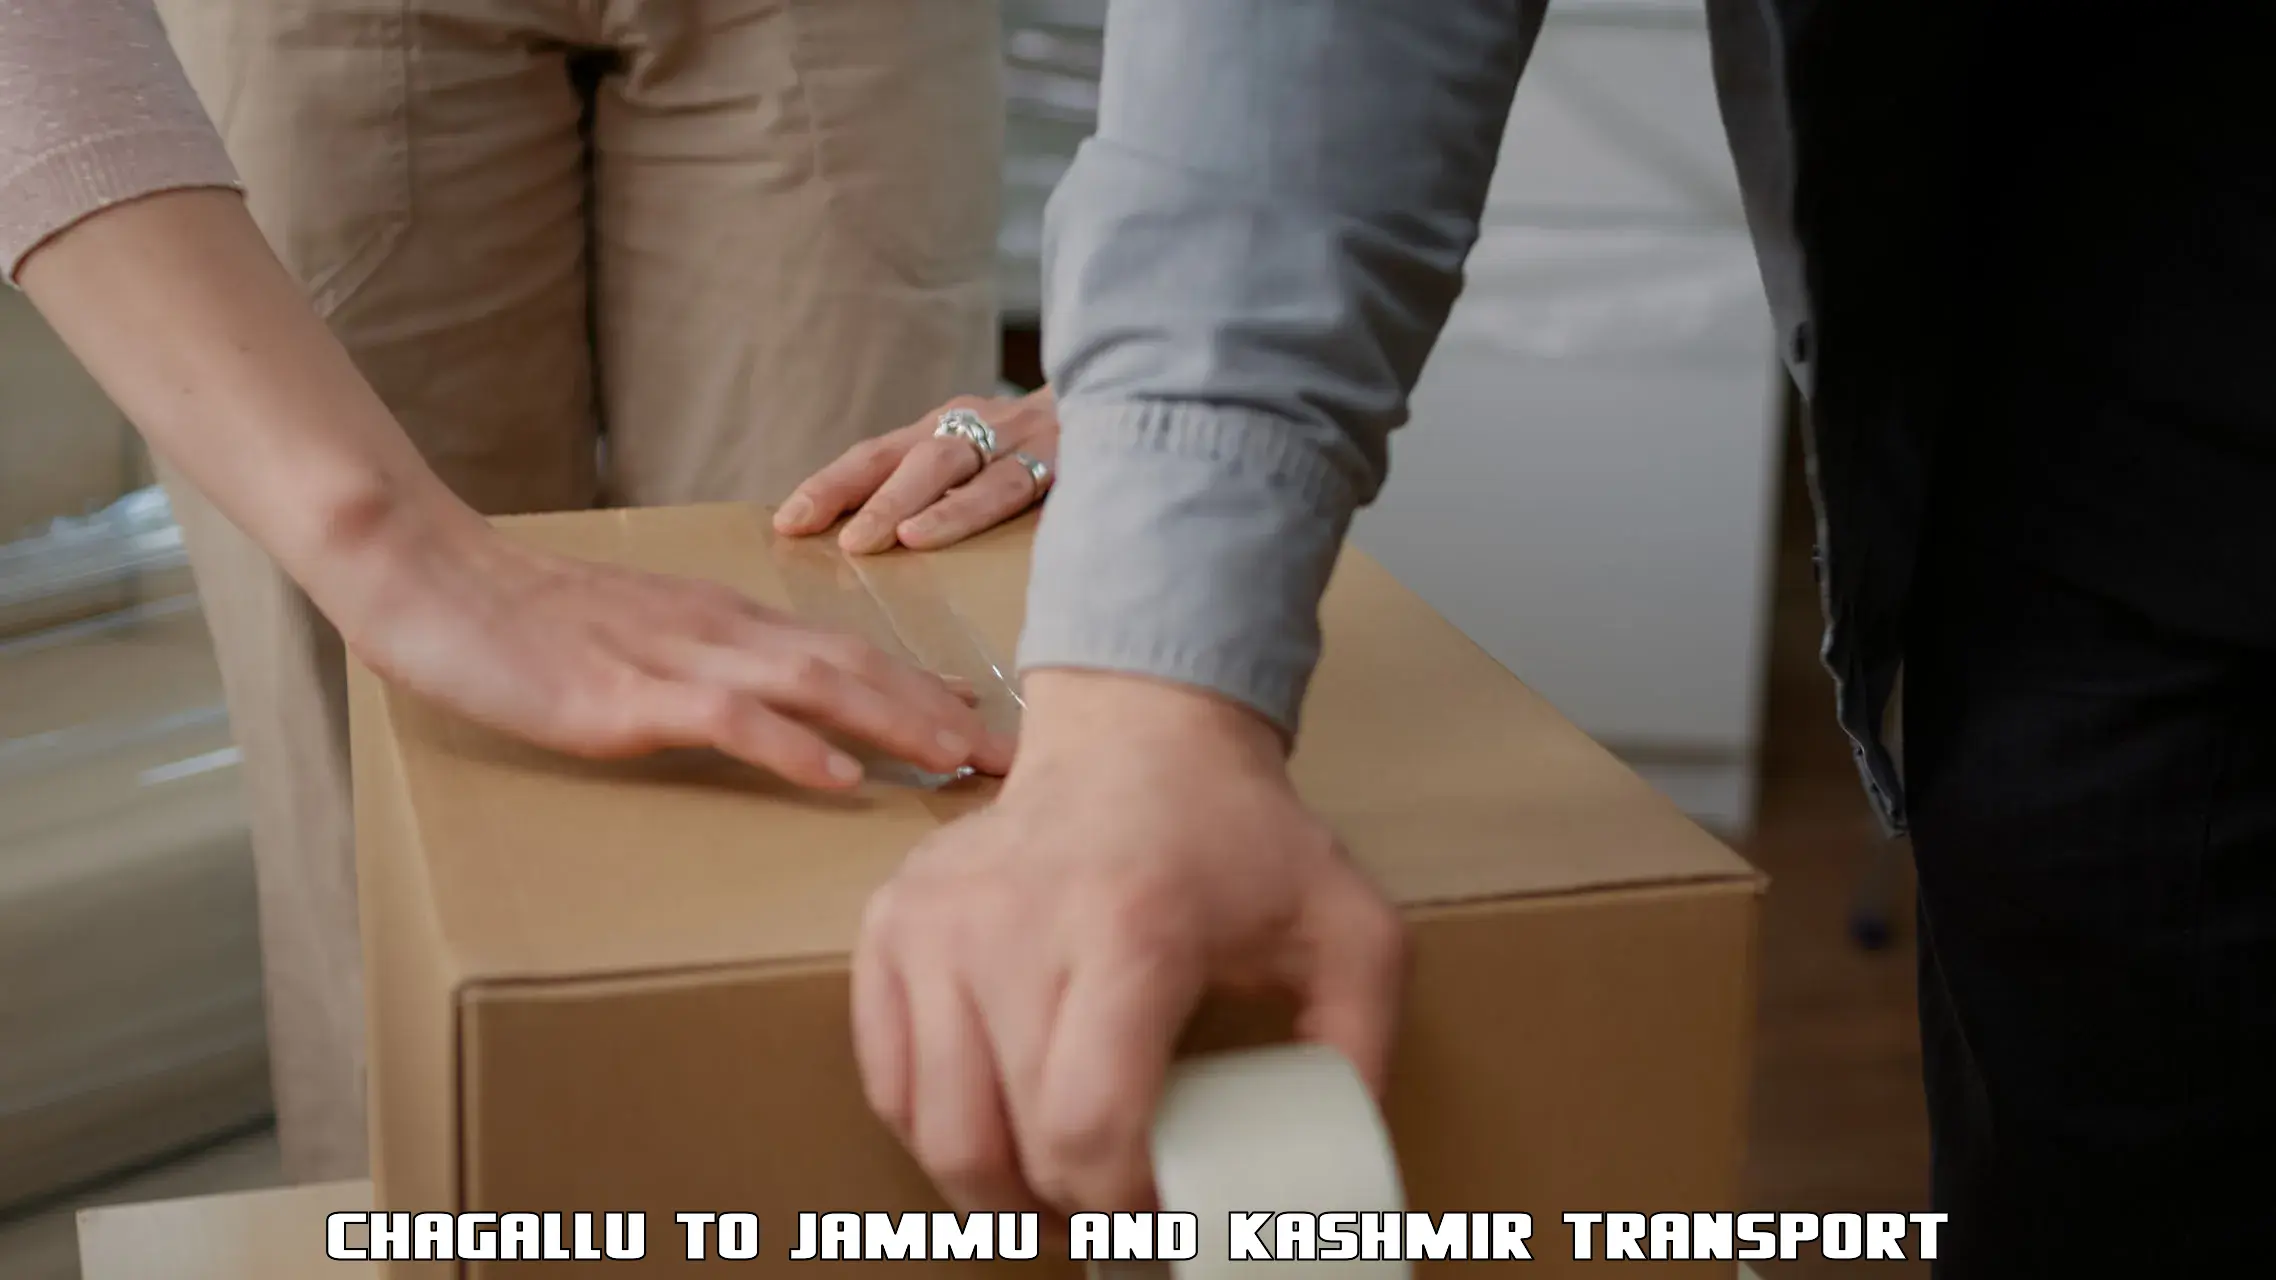 Express transport services Chagallu to Jammu and Kashmir